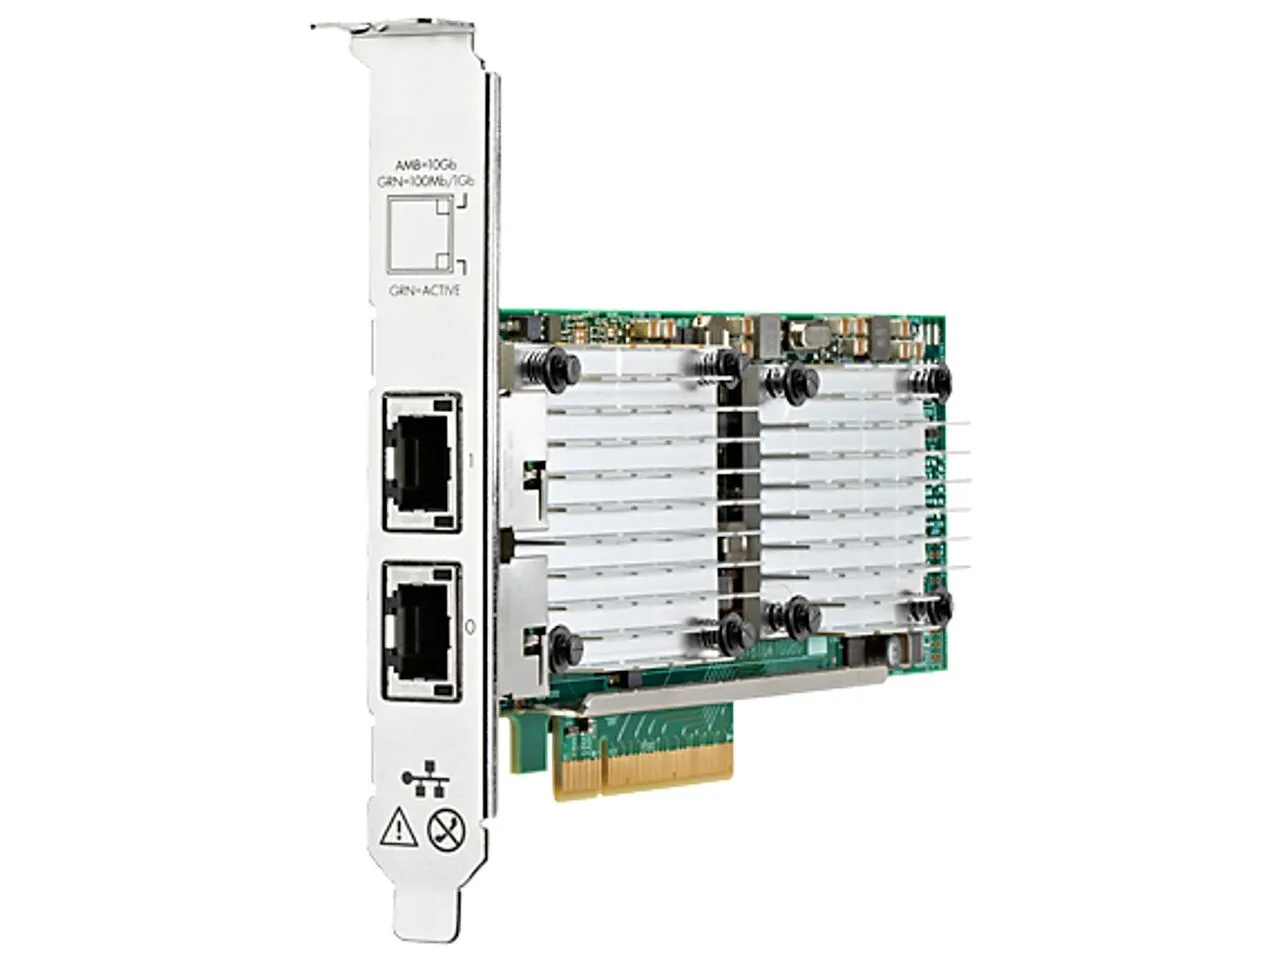   Network Adapter 657128-002 for HPE Proliant DL380 Gen9 Server 